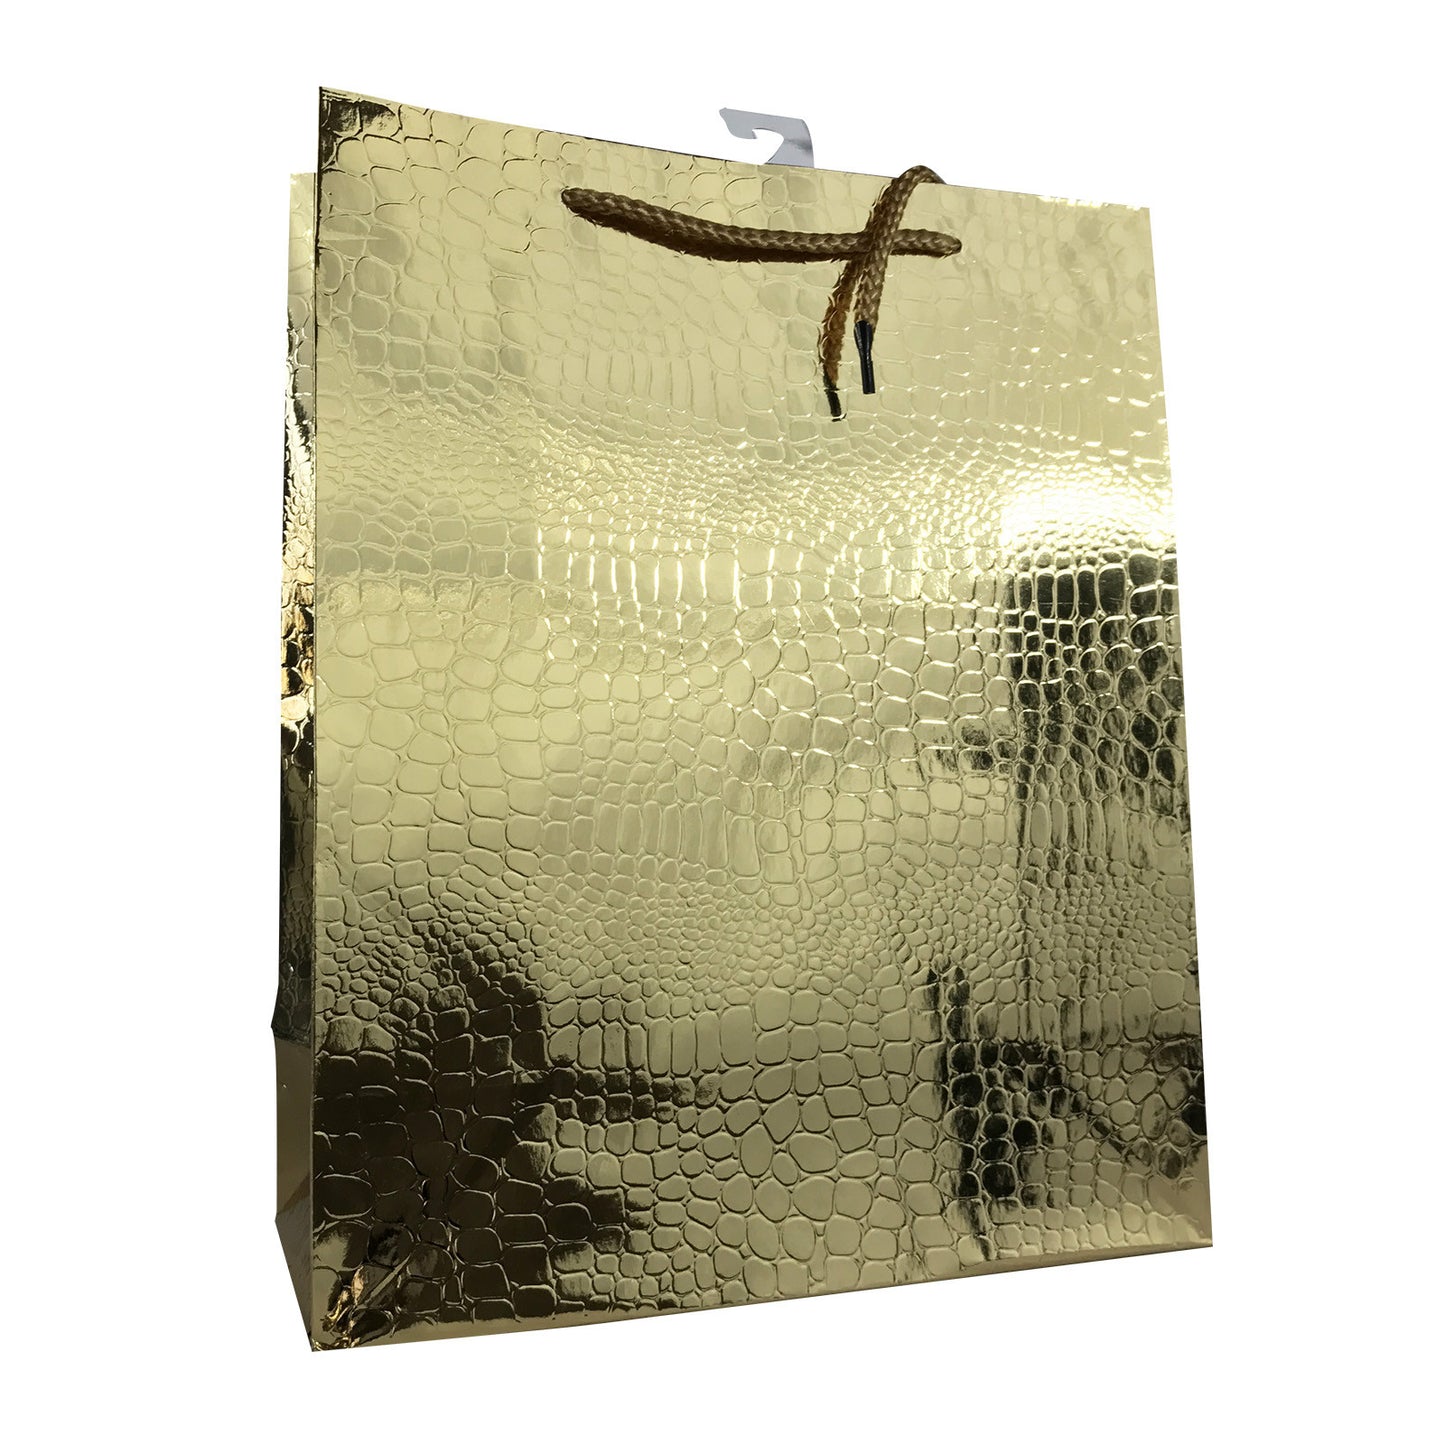 Allgala 12-pc Everyday Gift bags Croc Skin Embossed